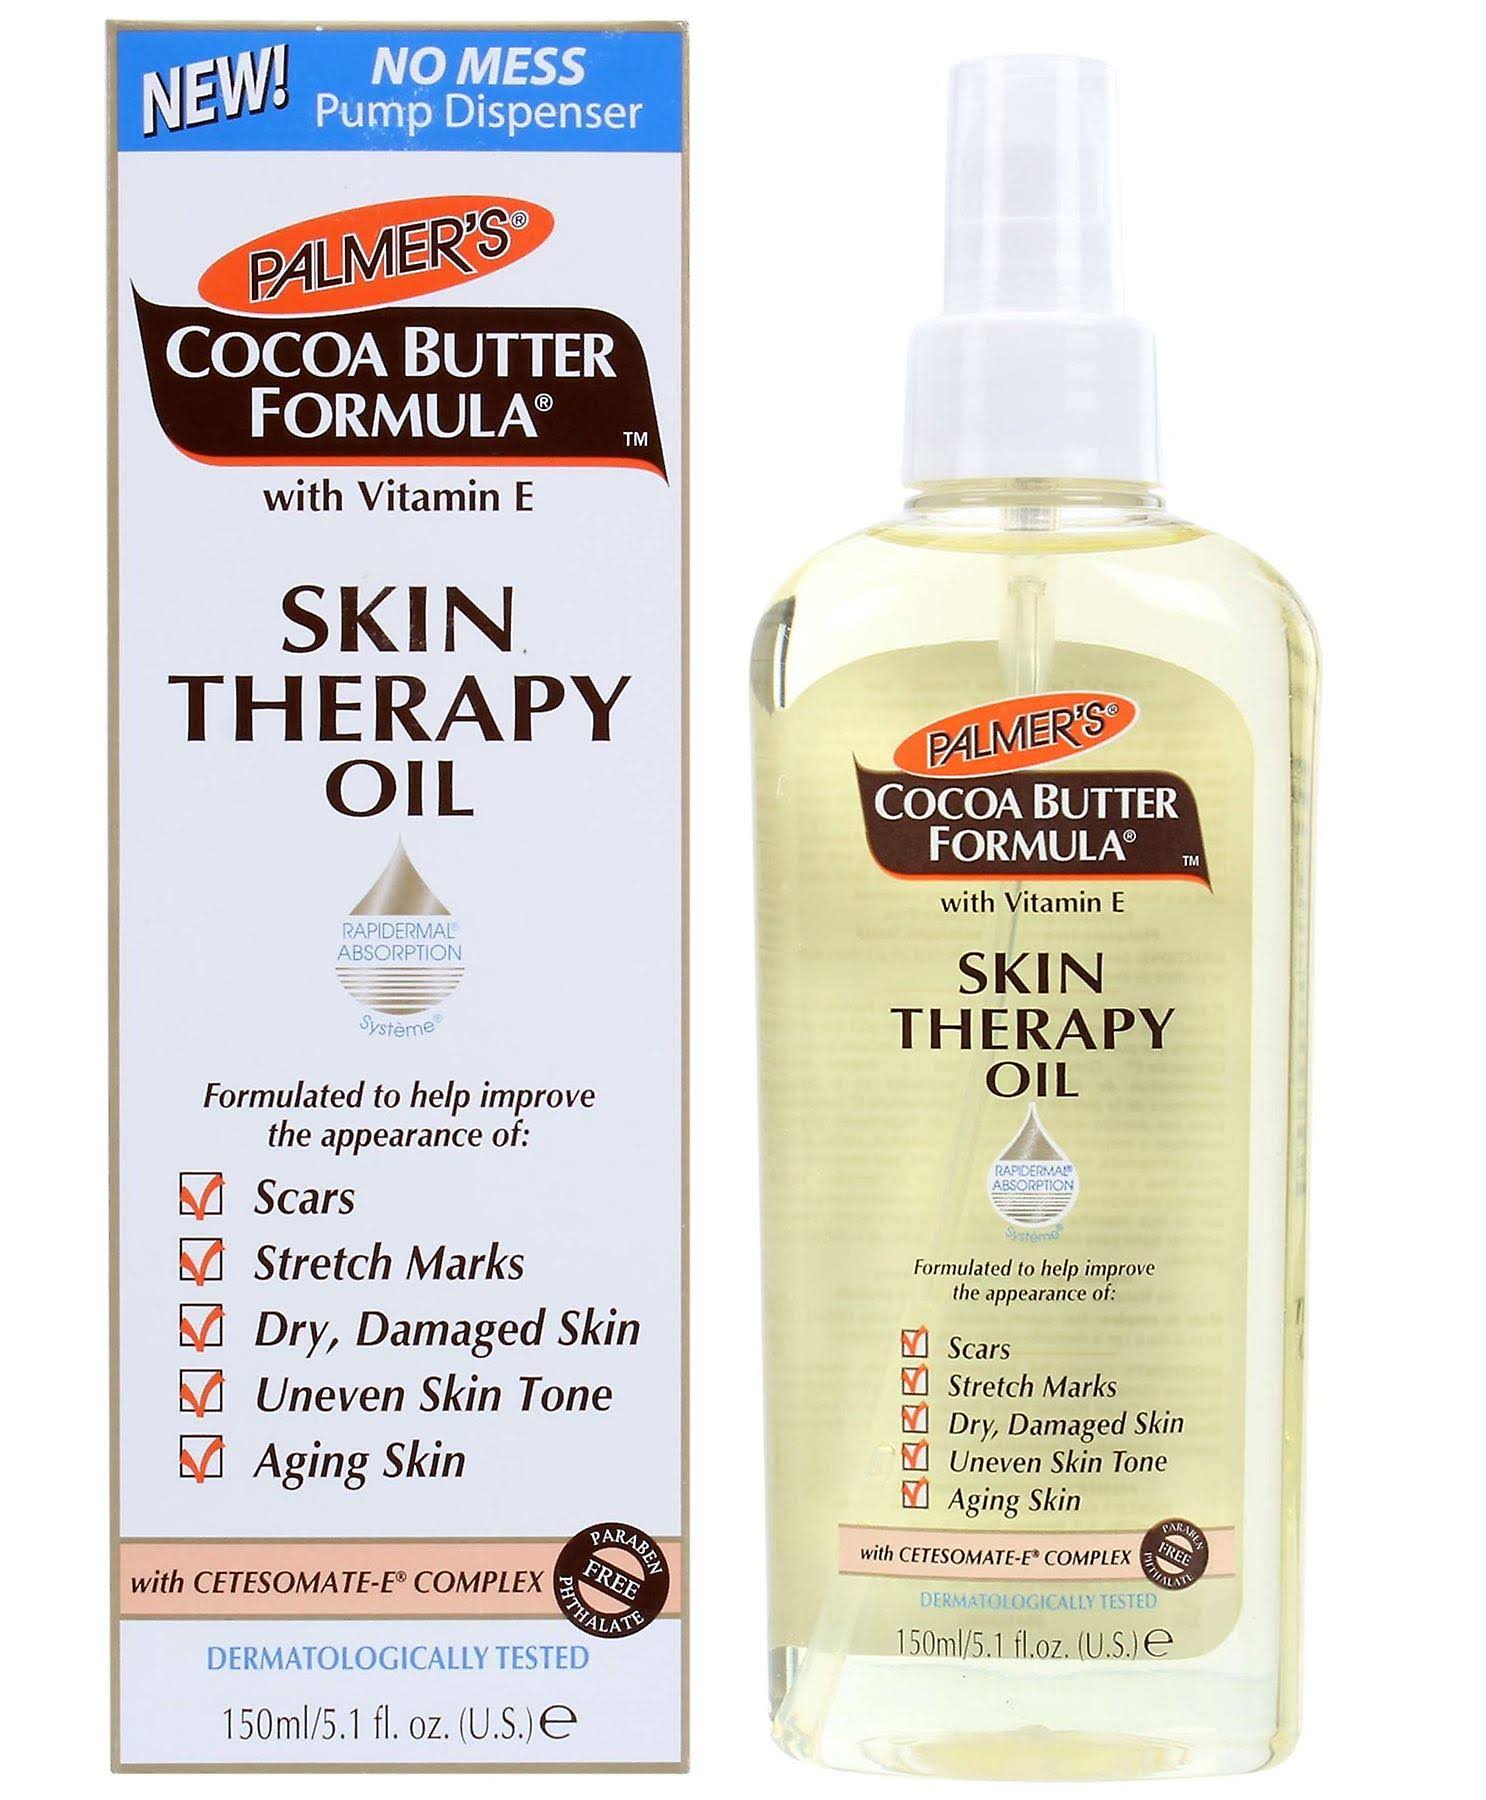 Palmer's Cocoa Butter Formula Skin Therapy Oil - 5.1 fl oz bottle